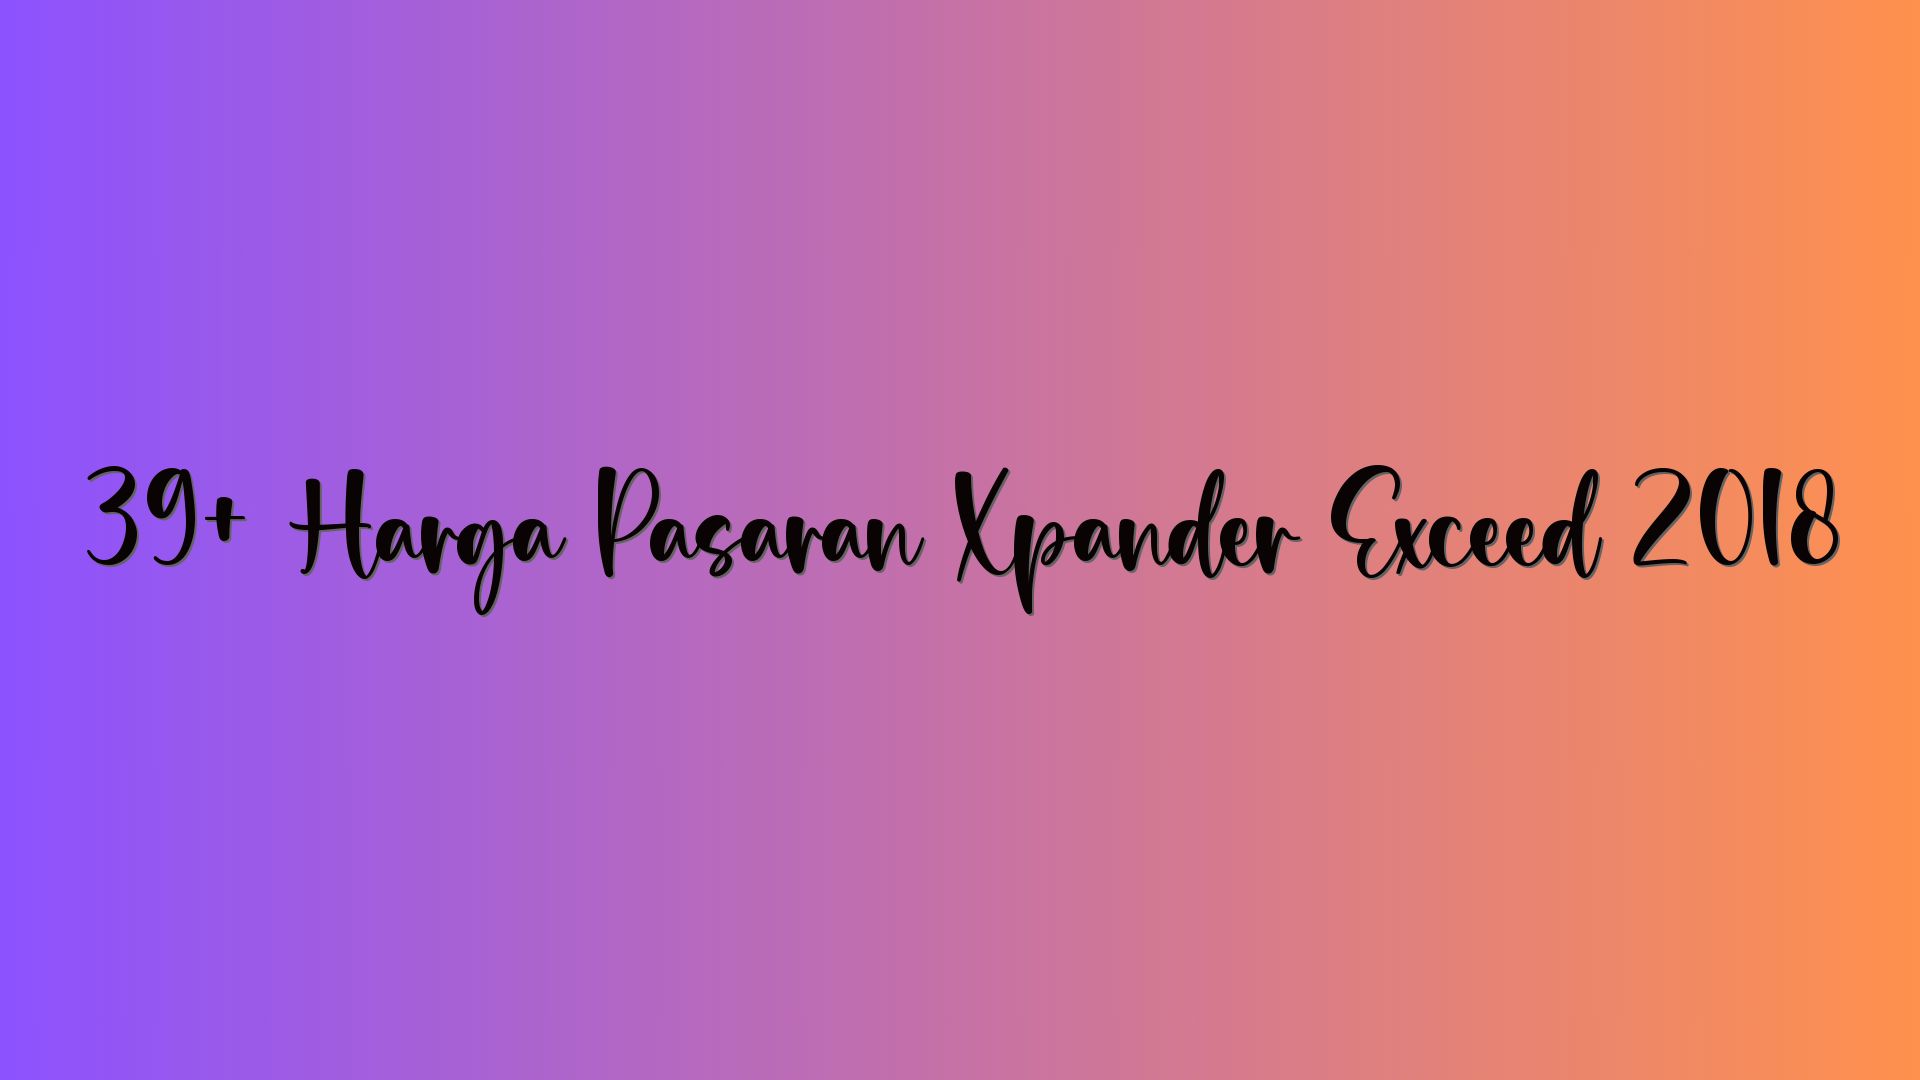 39+ Harga Pasaran Xpander Exceed 2018